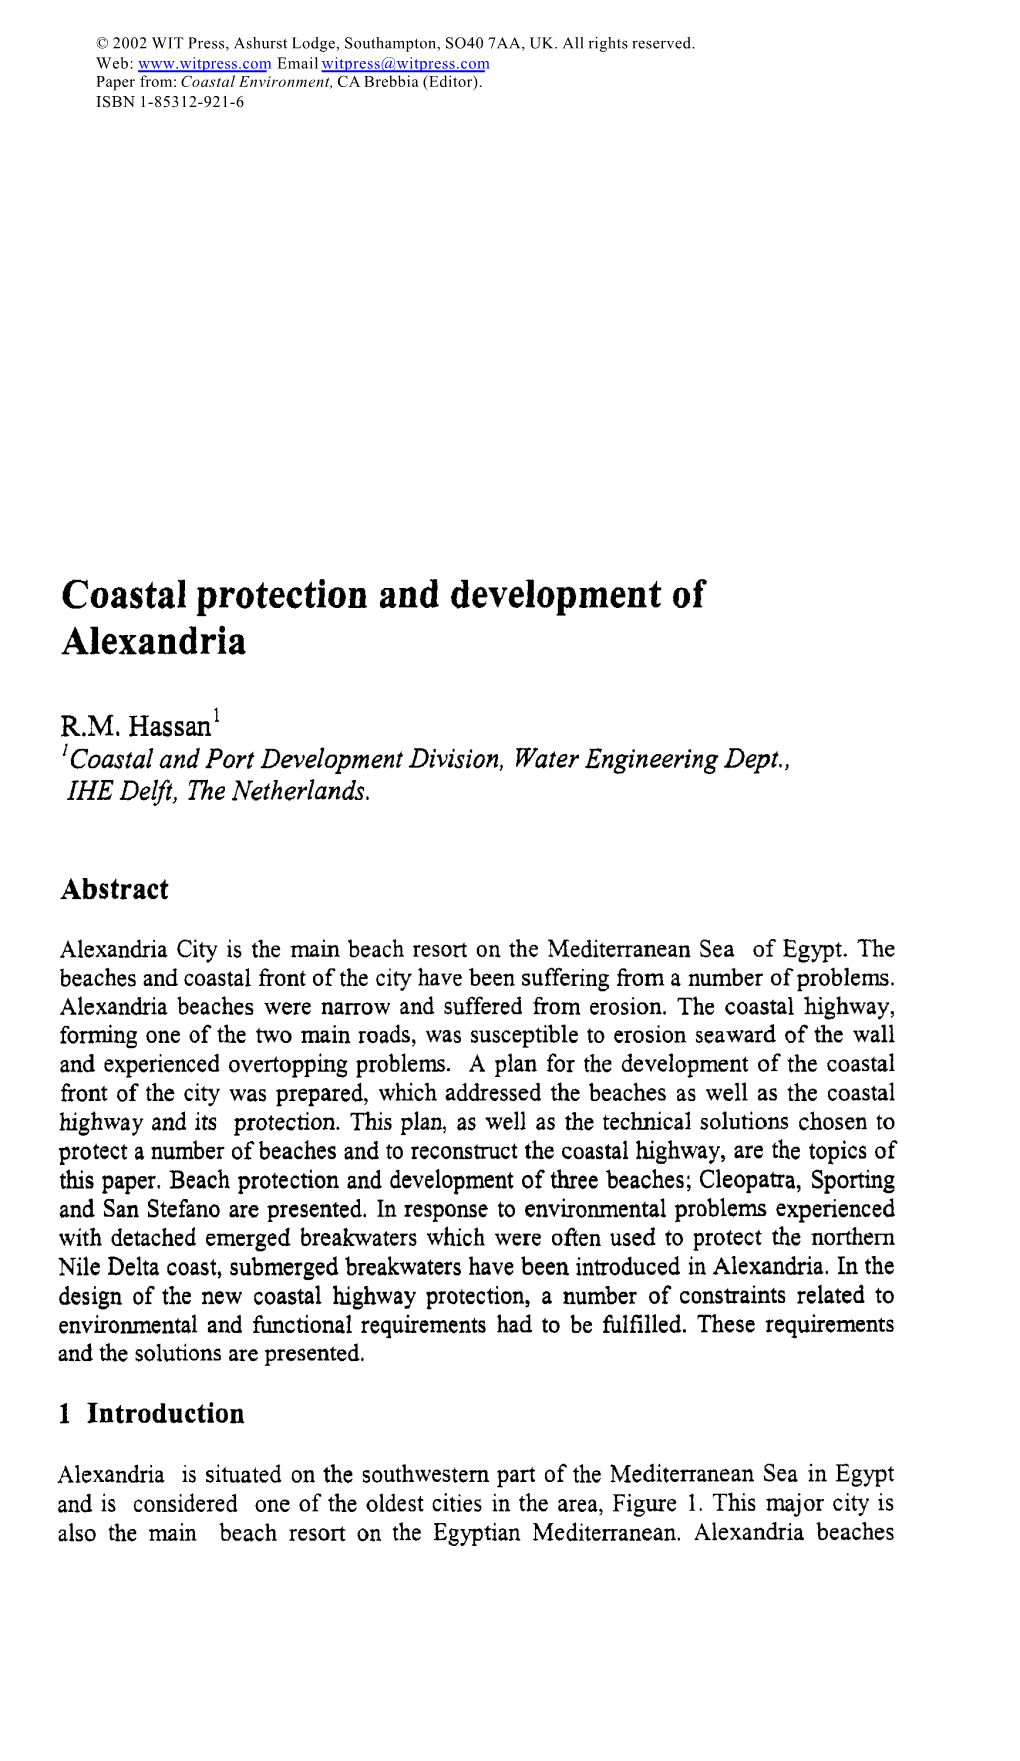 Coastal Protection and Development of Alexandria